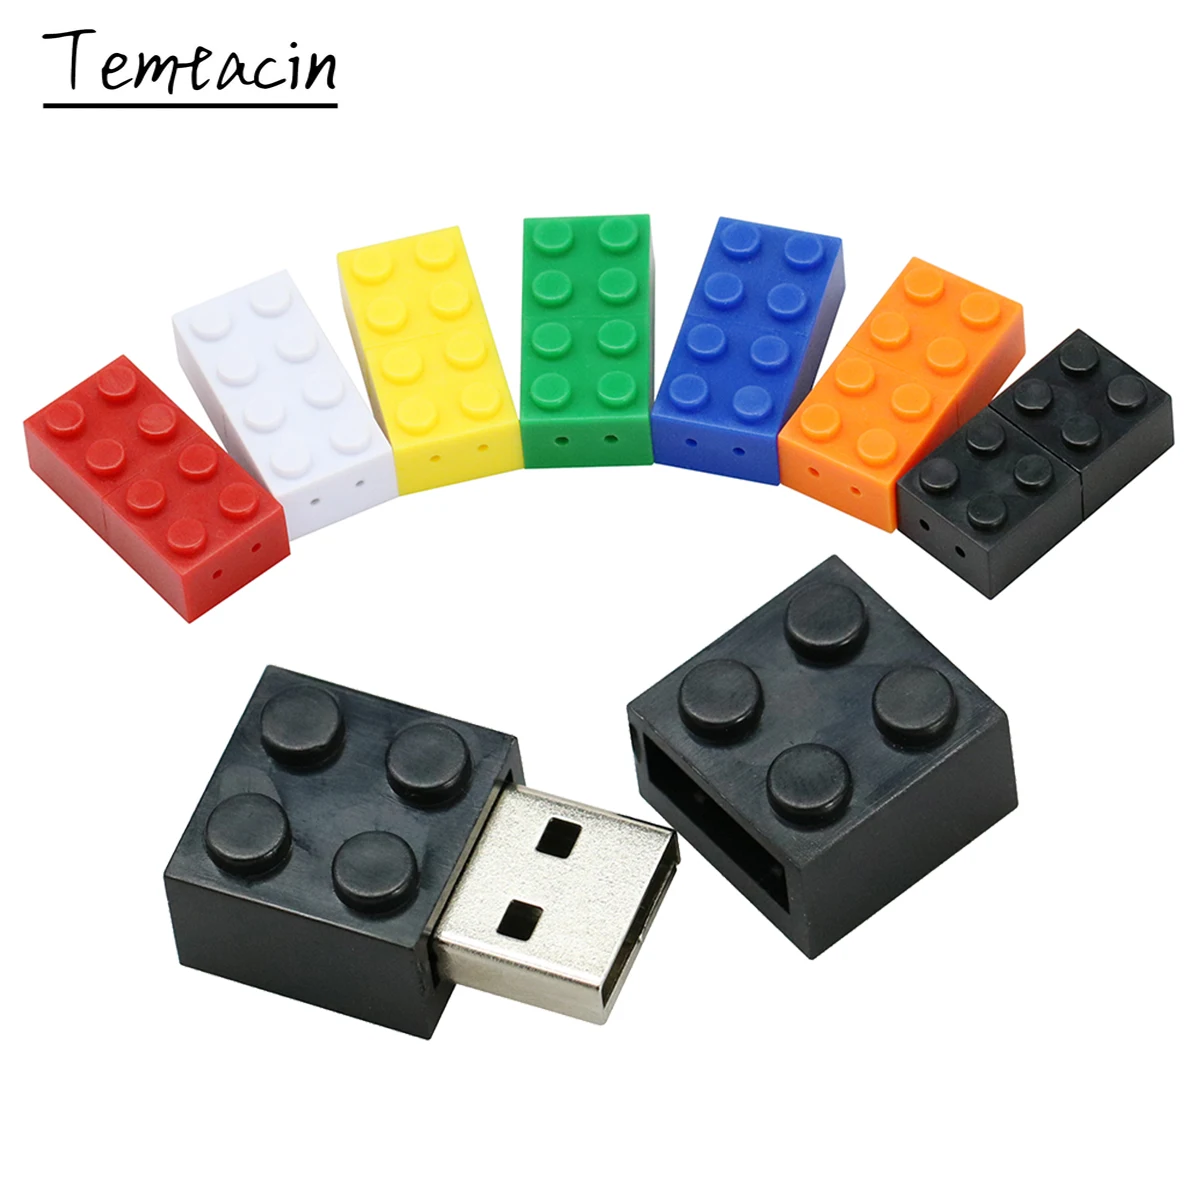 Festival Vejrtrækning Evolve Pendrive Lego Usb Flash Drives | Plastic Toy Building Block - Pendrive  128gb Memoria - Aliexpress